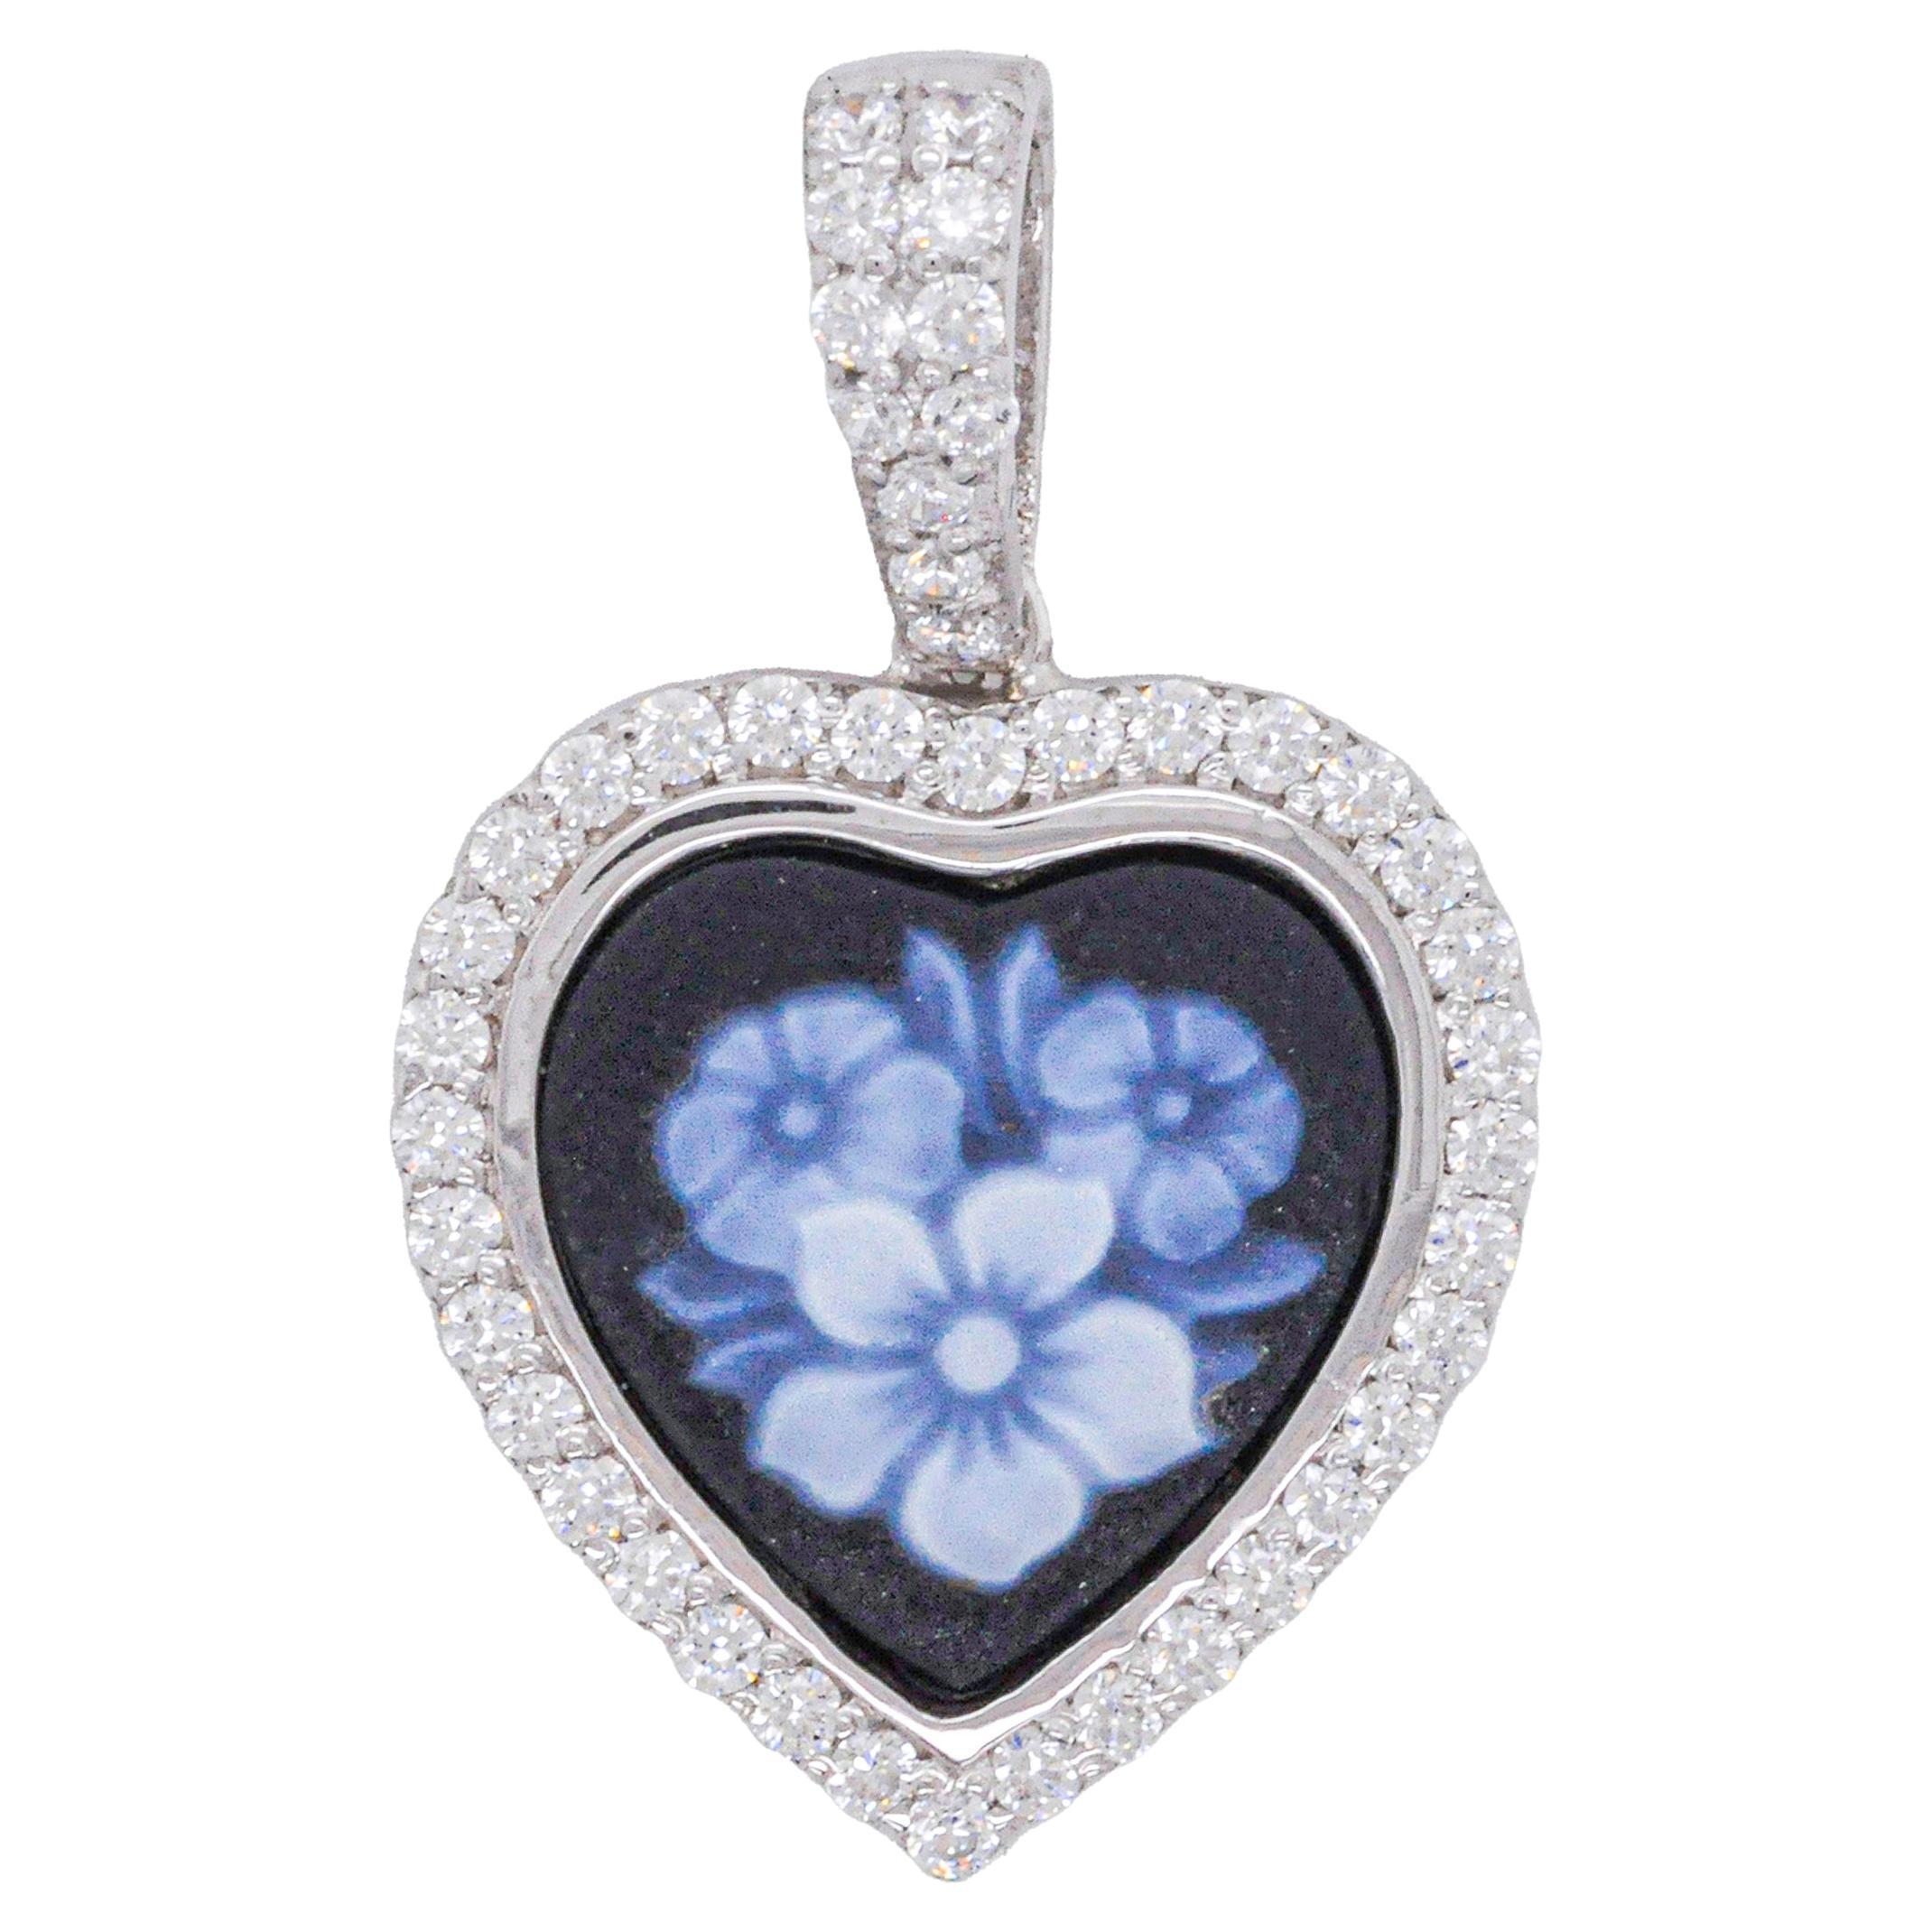 14K Gold Heart shaped Flower Agate Cameo Diamonds Pendant Necklace